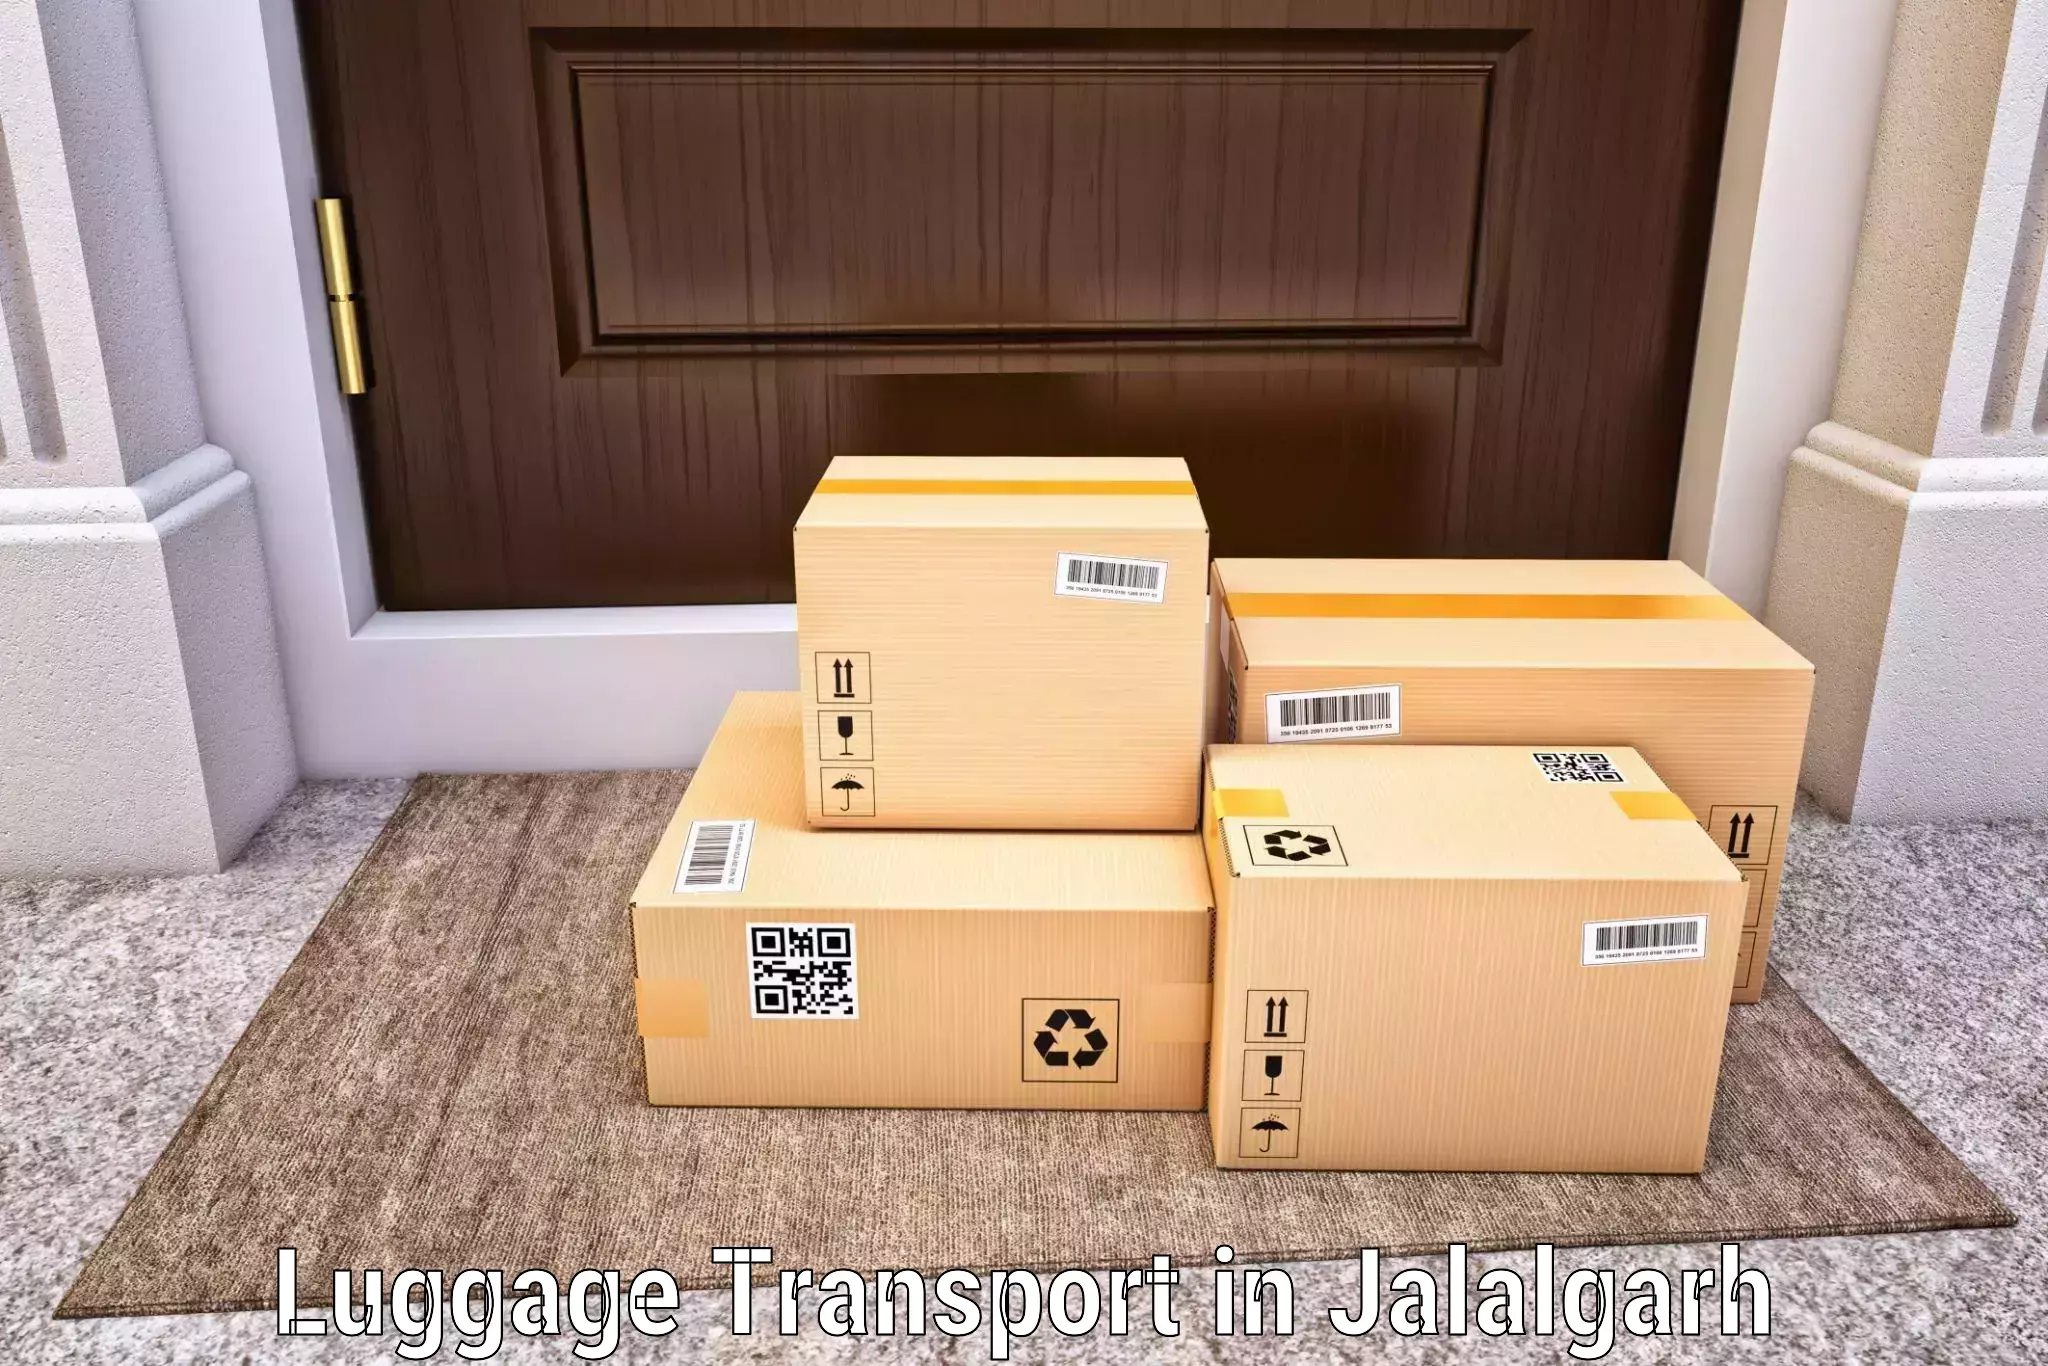 Corporate baggage transport in Jalalgarh